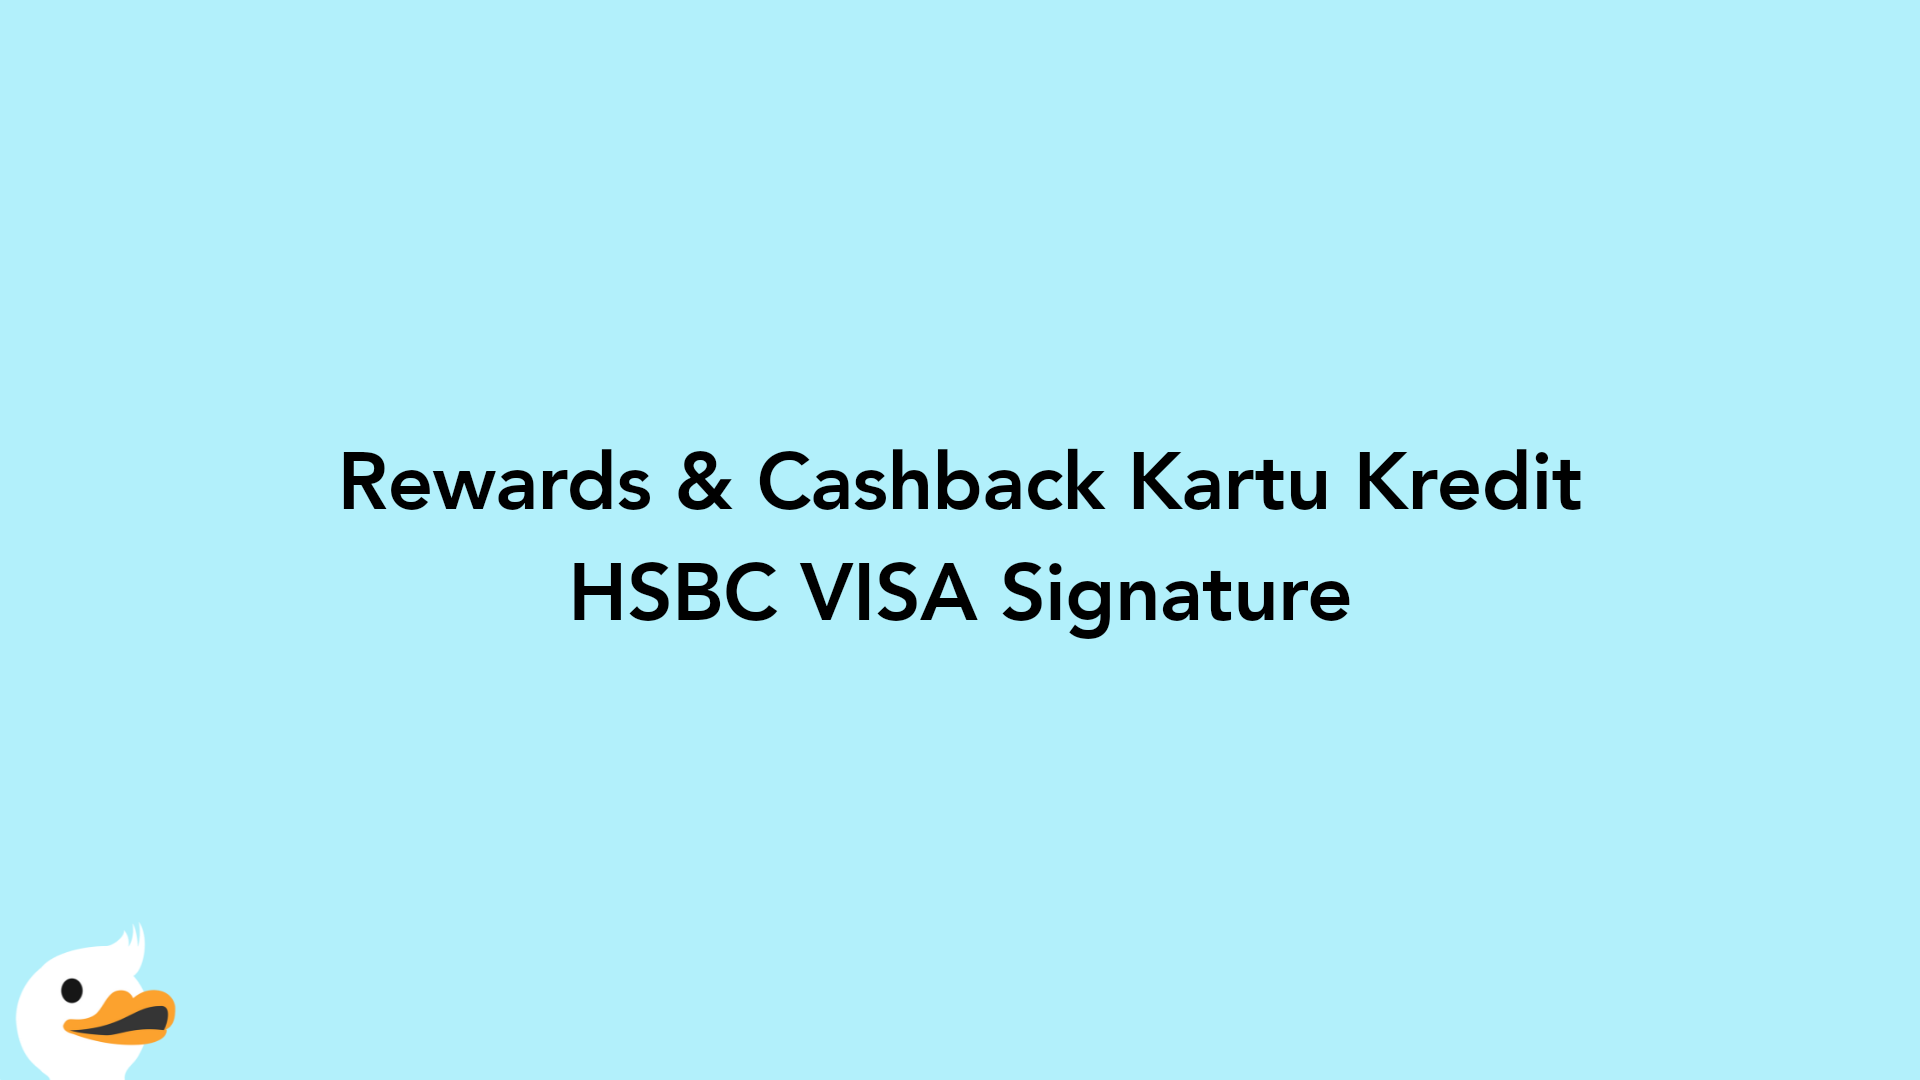 Rewards & Cashback Kartu Kredit HSBC VISA Signature